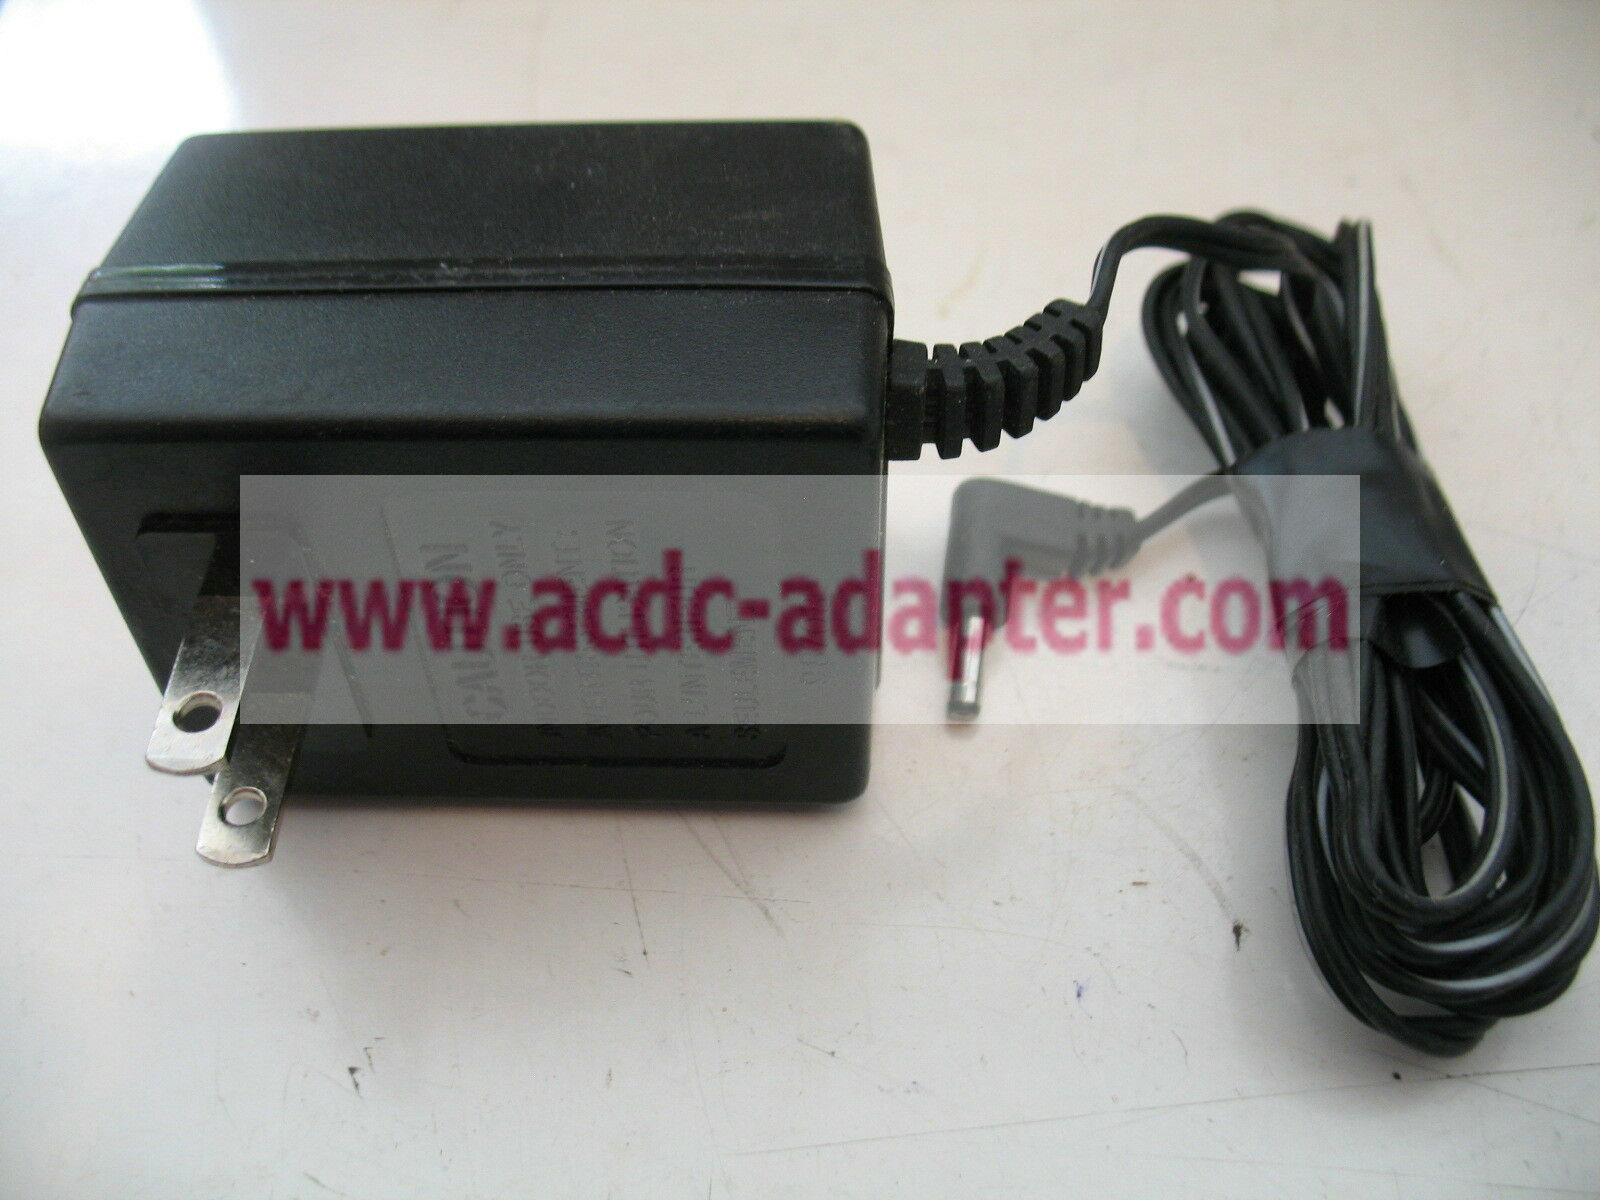 Genuine VTech 26-0142-02-08 Component Telephone Power Supply 11V 550mA AC Adapter - Click Image to Close